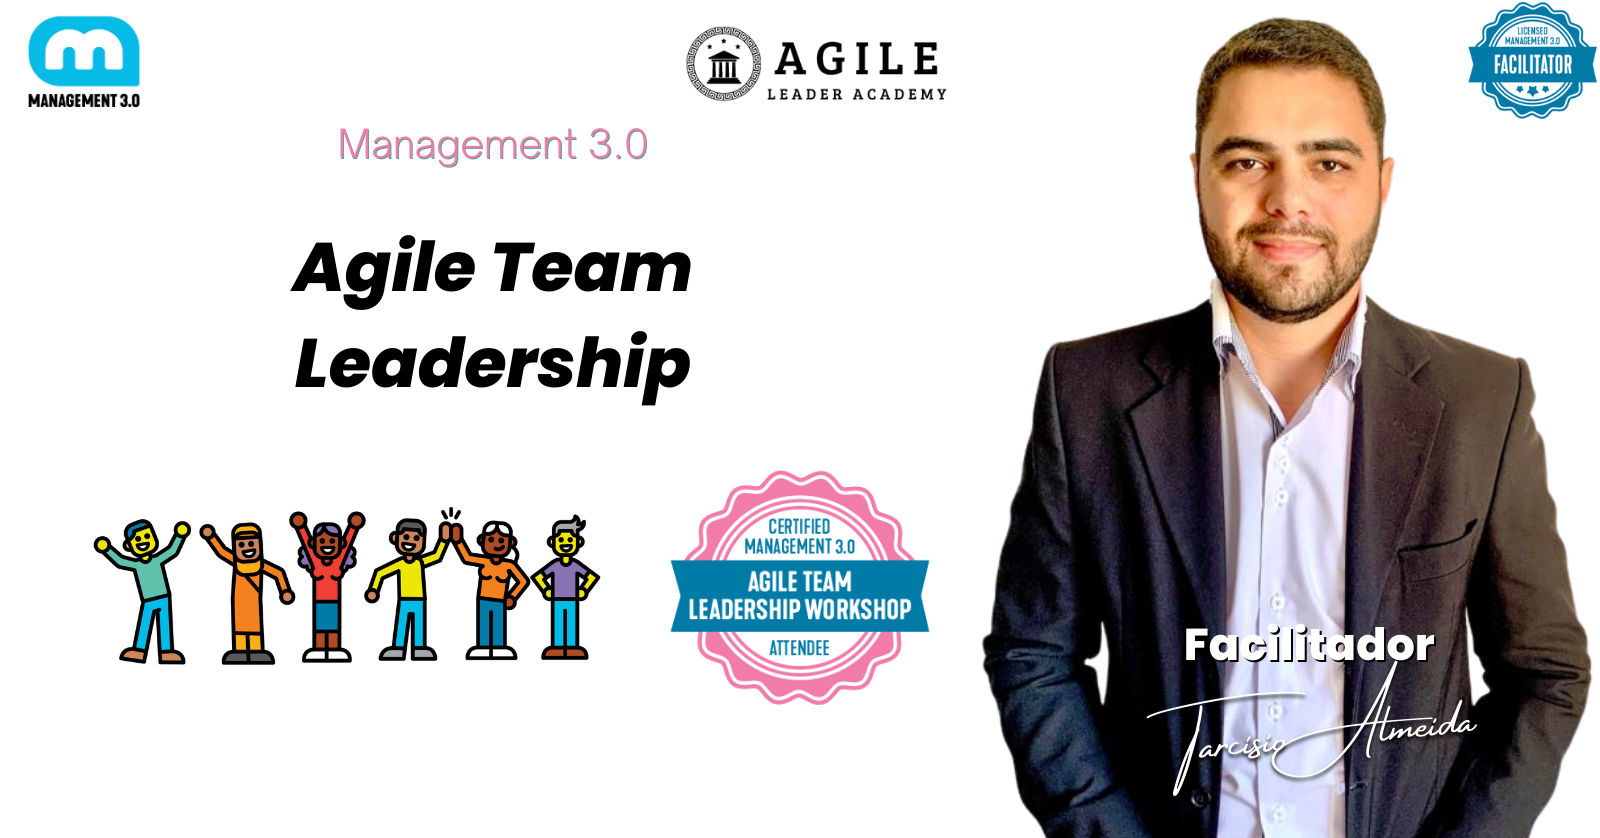 Certificação Management 3.0 Agile Team Leadership workshop Facilitador Tarcísio